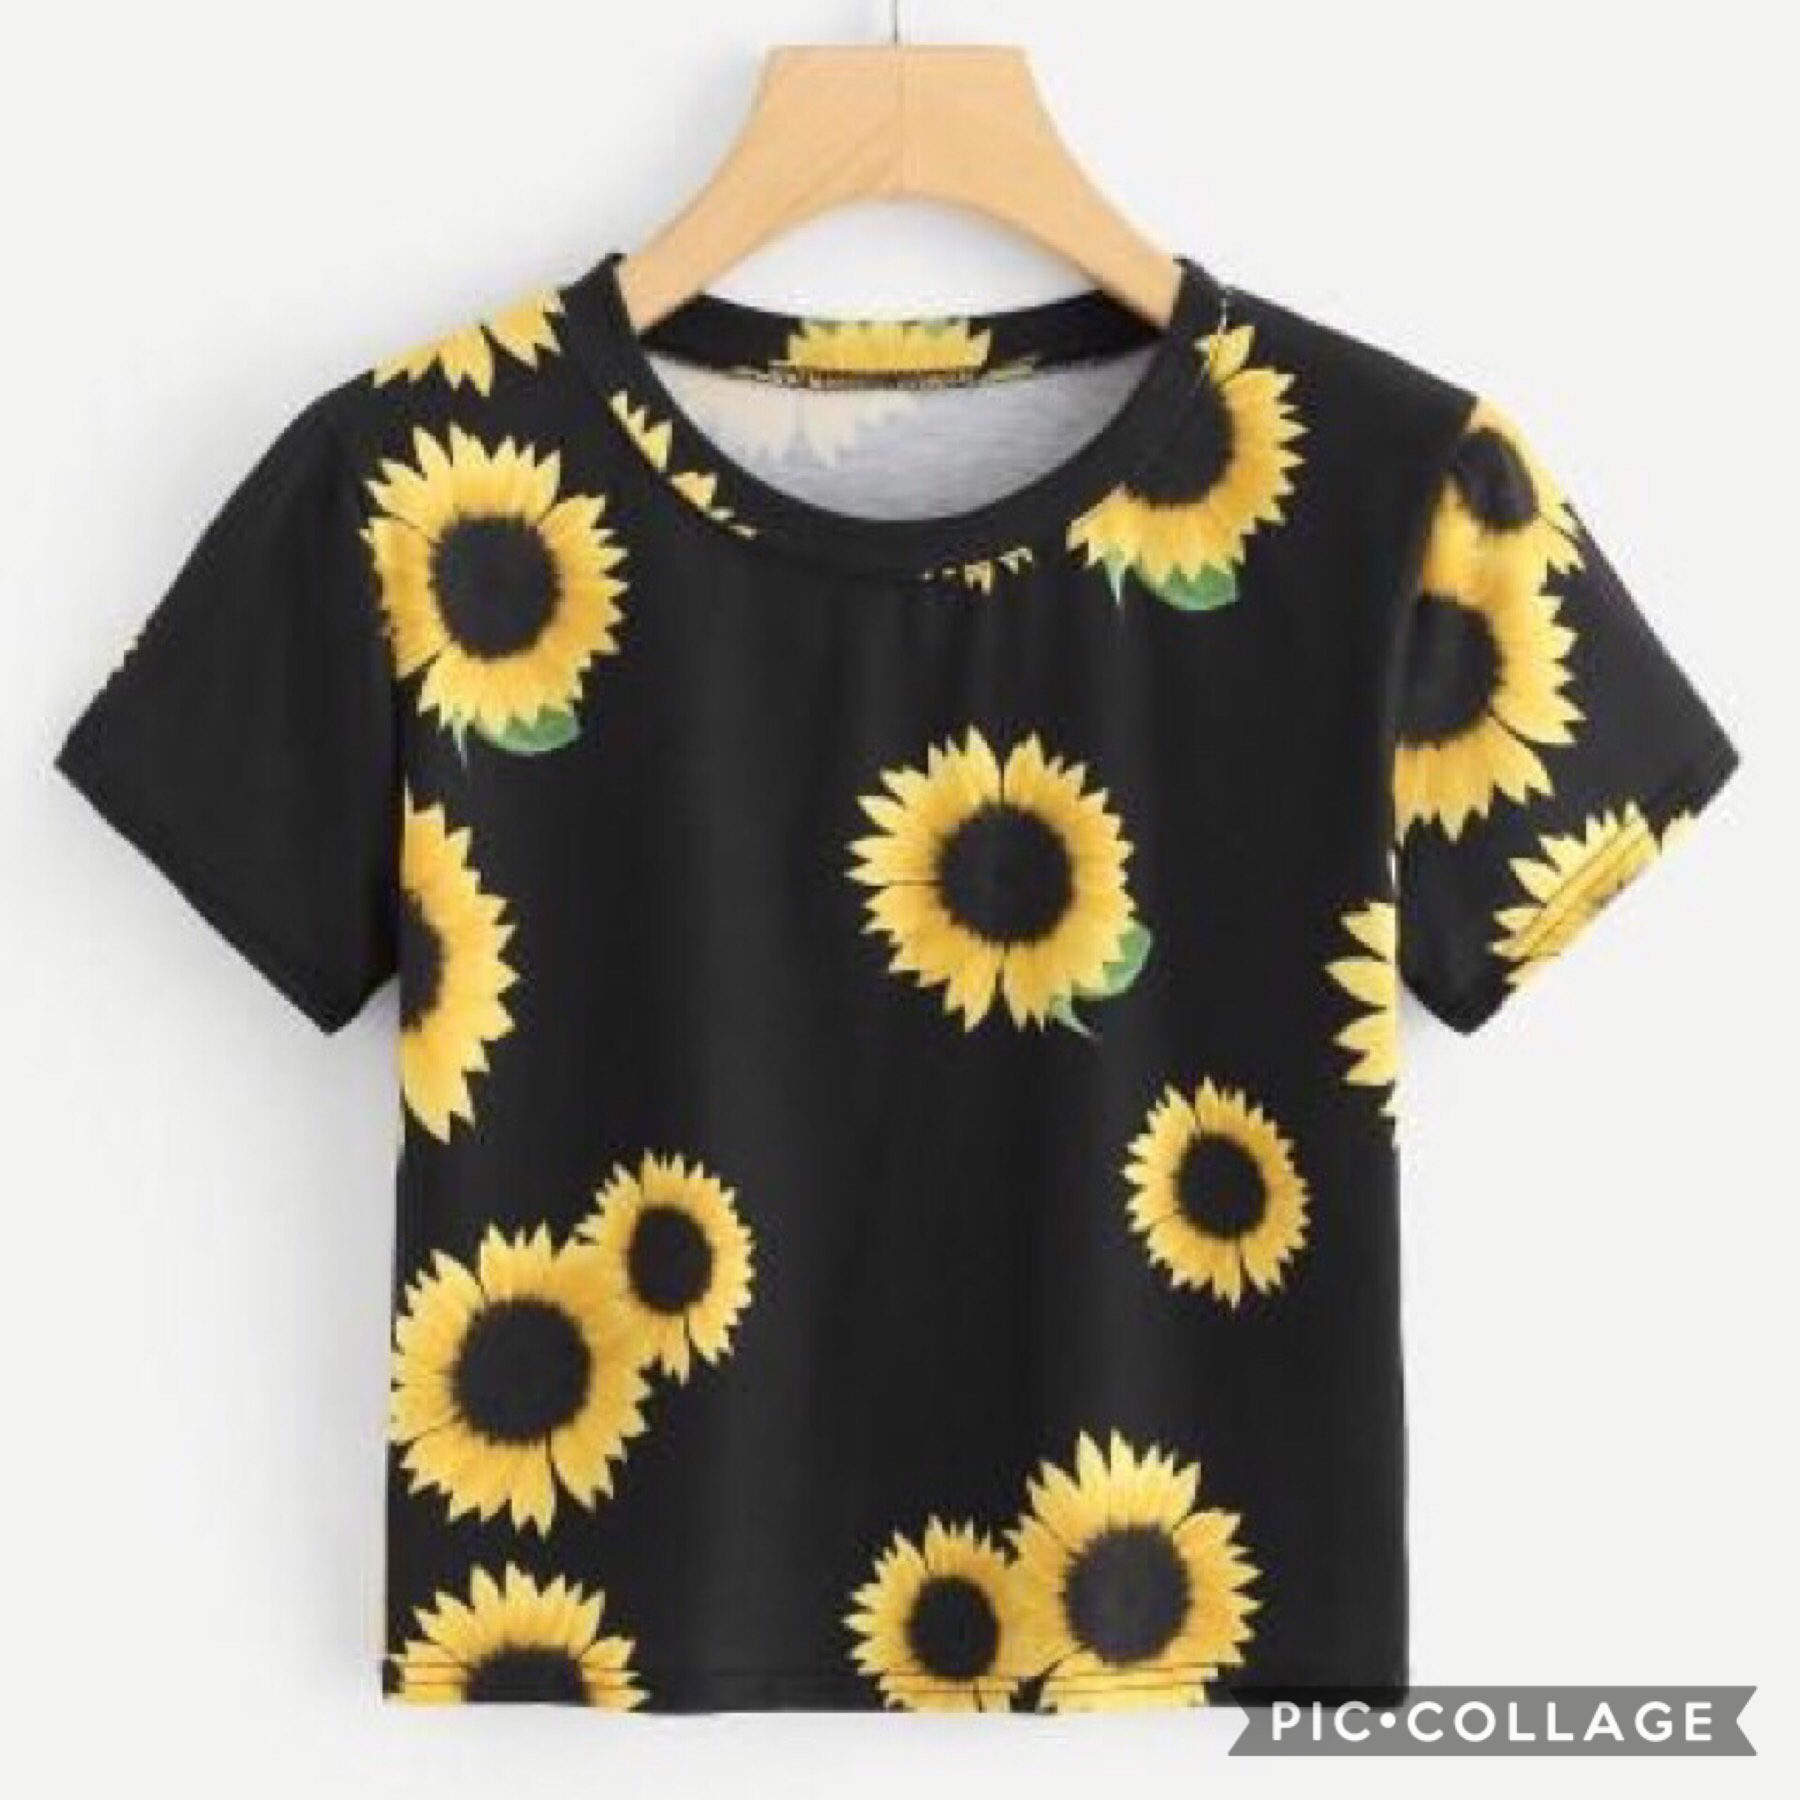 Sunflower Tee😱
4-4-19